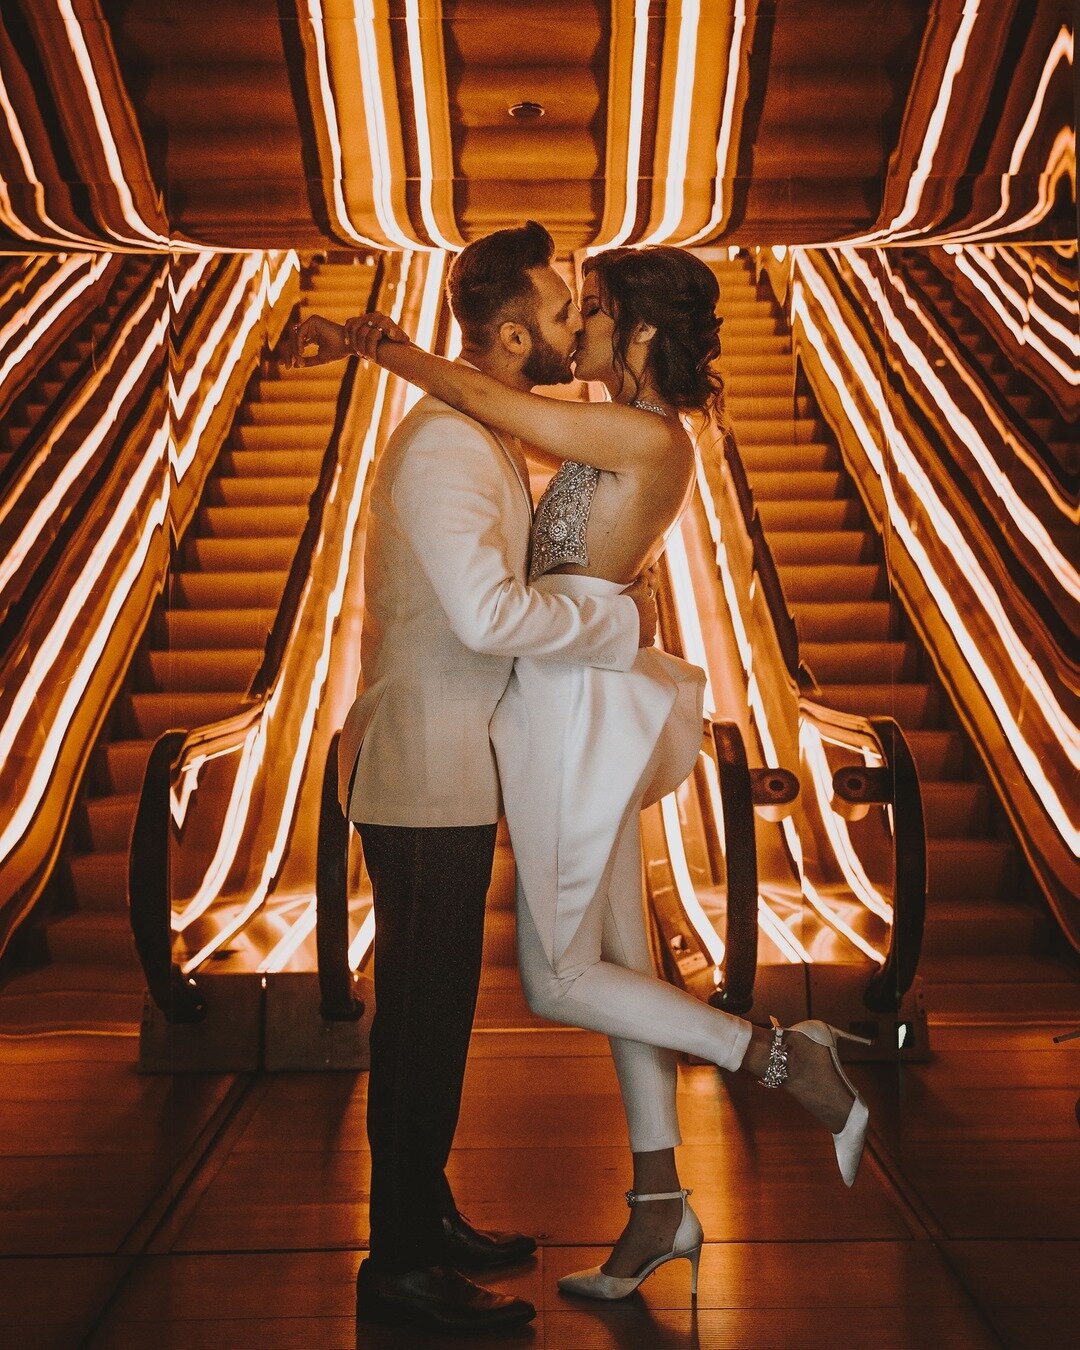 We love this peplum jumpsuit our bride wore....comfy yet stylish 🧡⠀⠀⠀⠀⠀⠀⠀⠀⠀
⠀⠀⠀⠀⠀⠀⠀⠀⠀
 #EventsByLexx #NYWeddingPlanner #LIWeddingPlanner #NYWedding #NJWedding #Wedding #EventPlanner #WeddingInspiration #WeddingDay #WeddingPlanner #EventPlannersNYC #